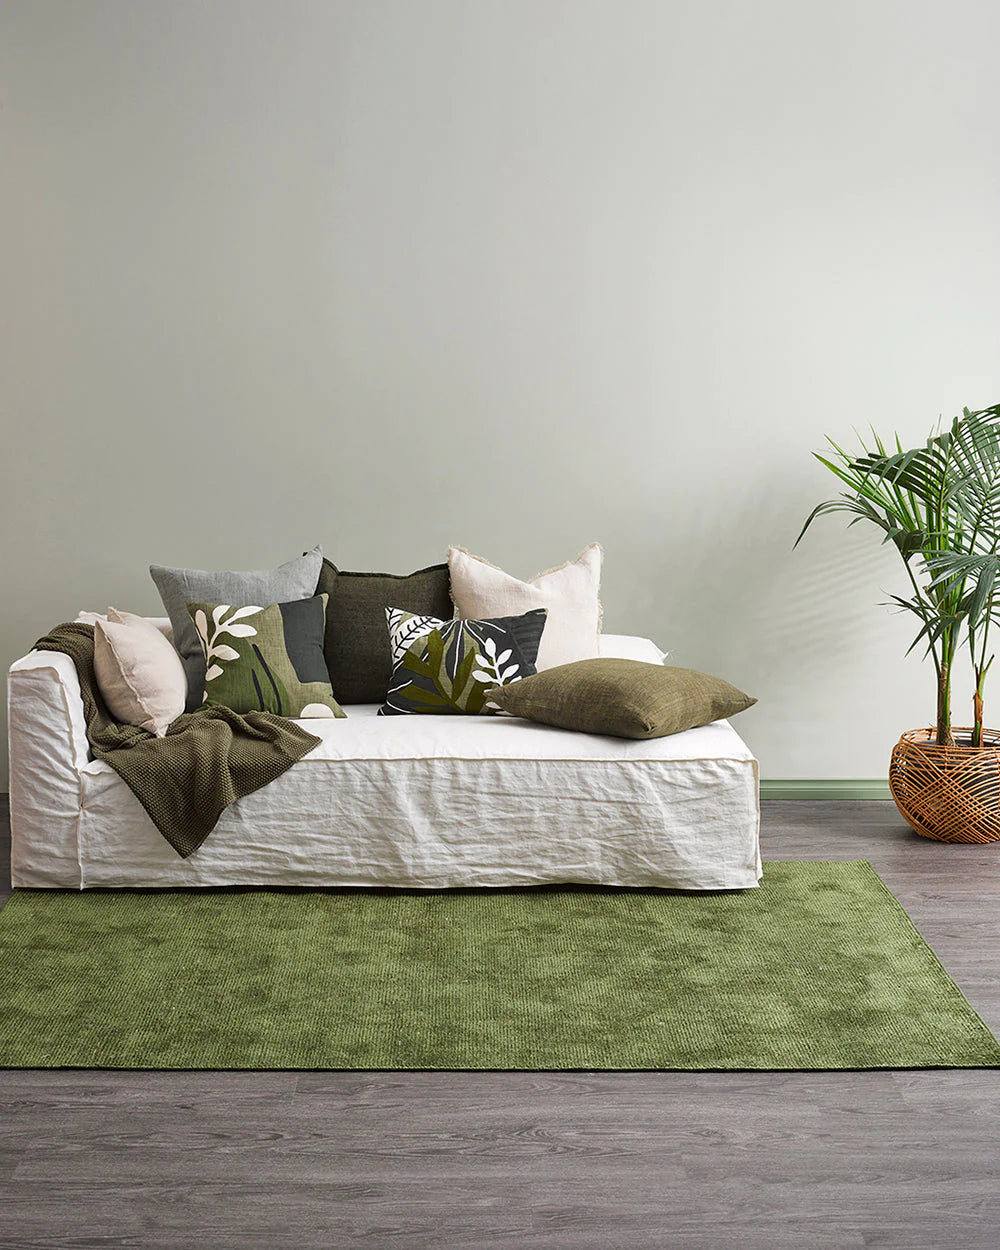 Orakei Leaf Green Outdoor Floor Rug from Baya Furtex Stockist Make Your House A Home, Furniture Store Bendigo. Free Australia Wide Delivery.